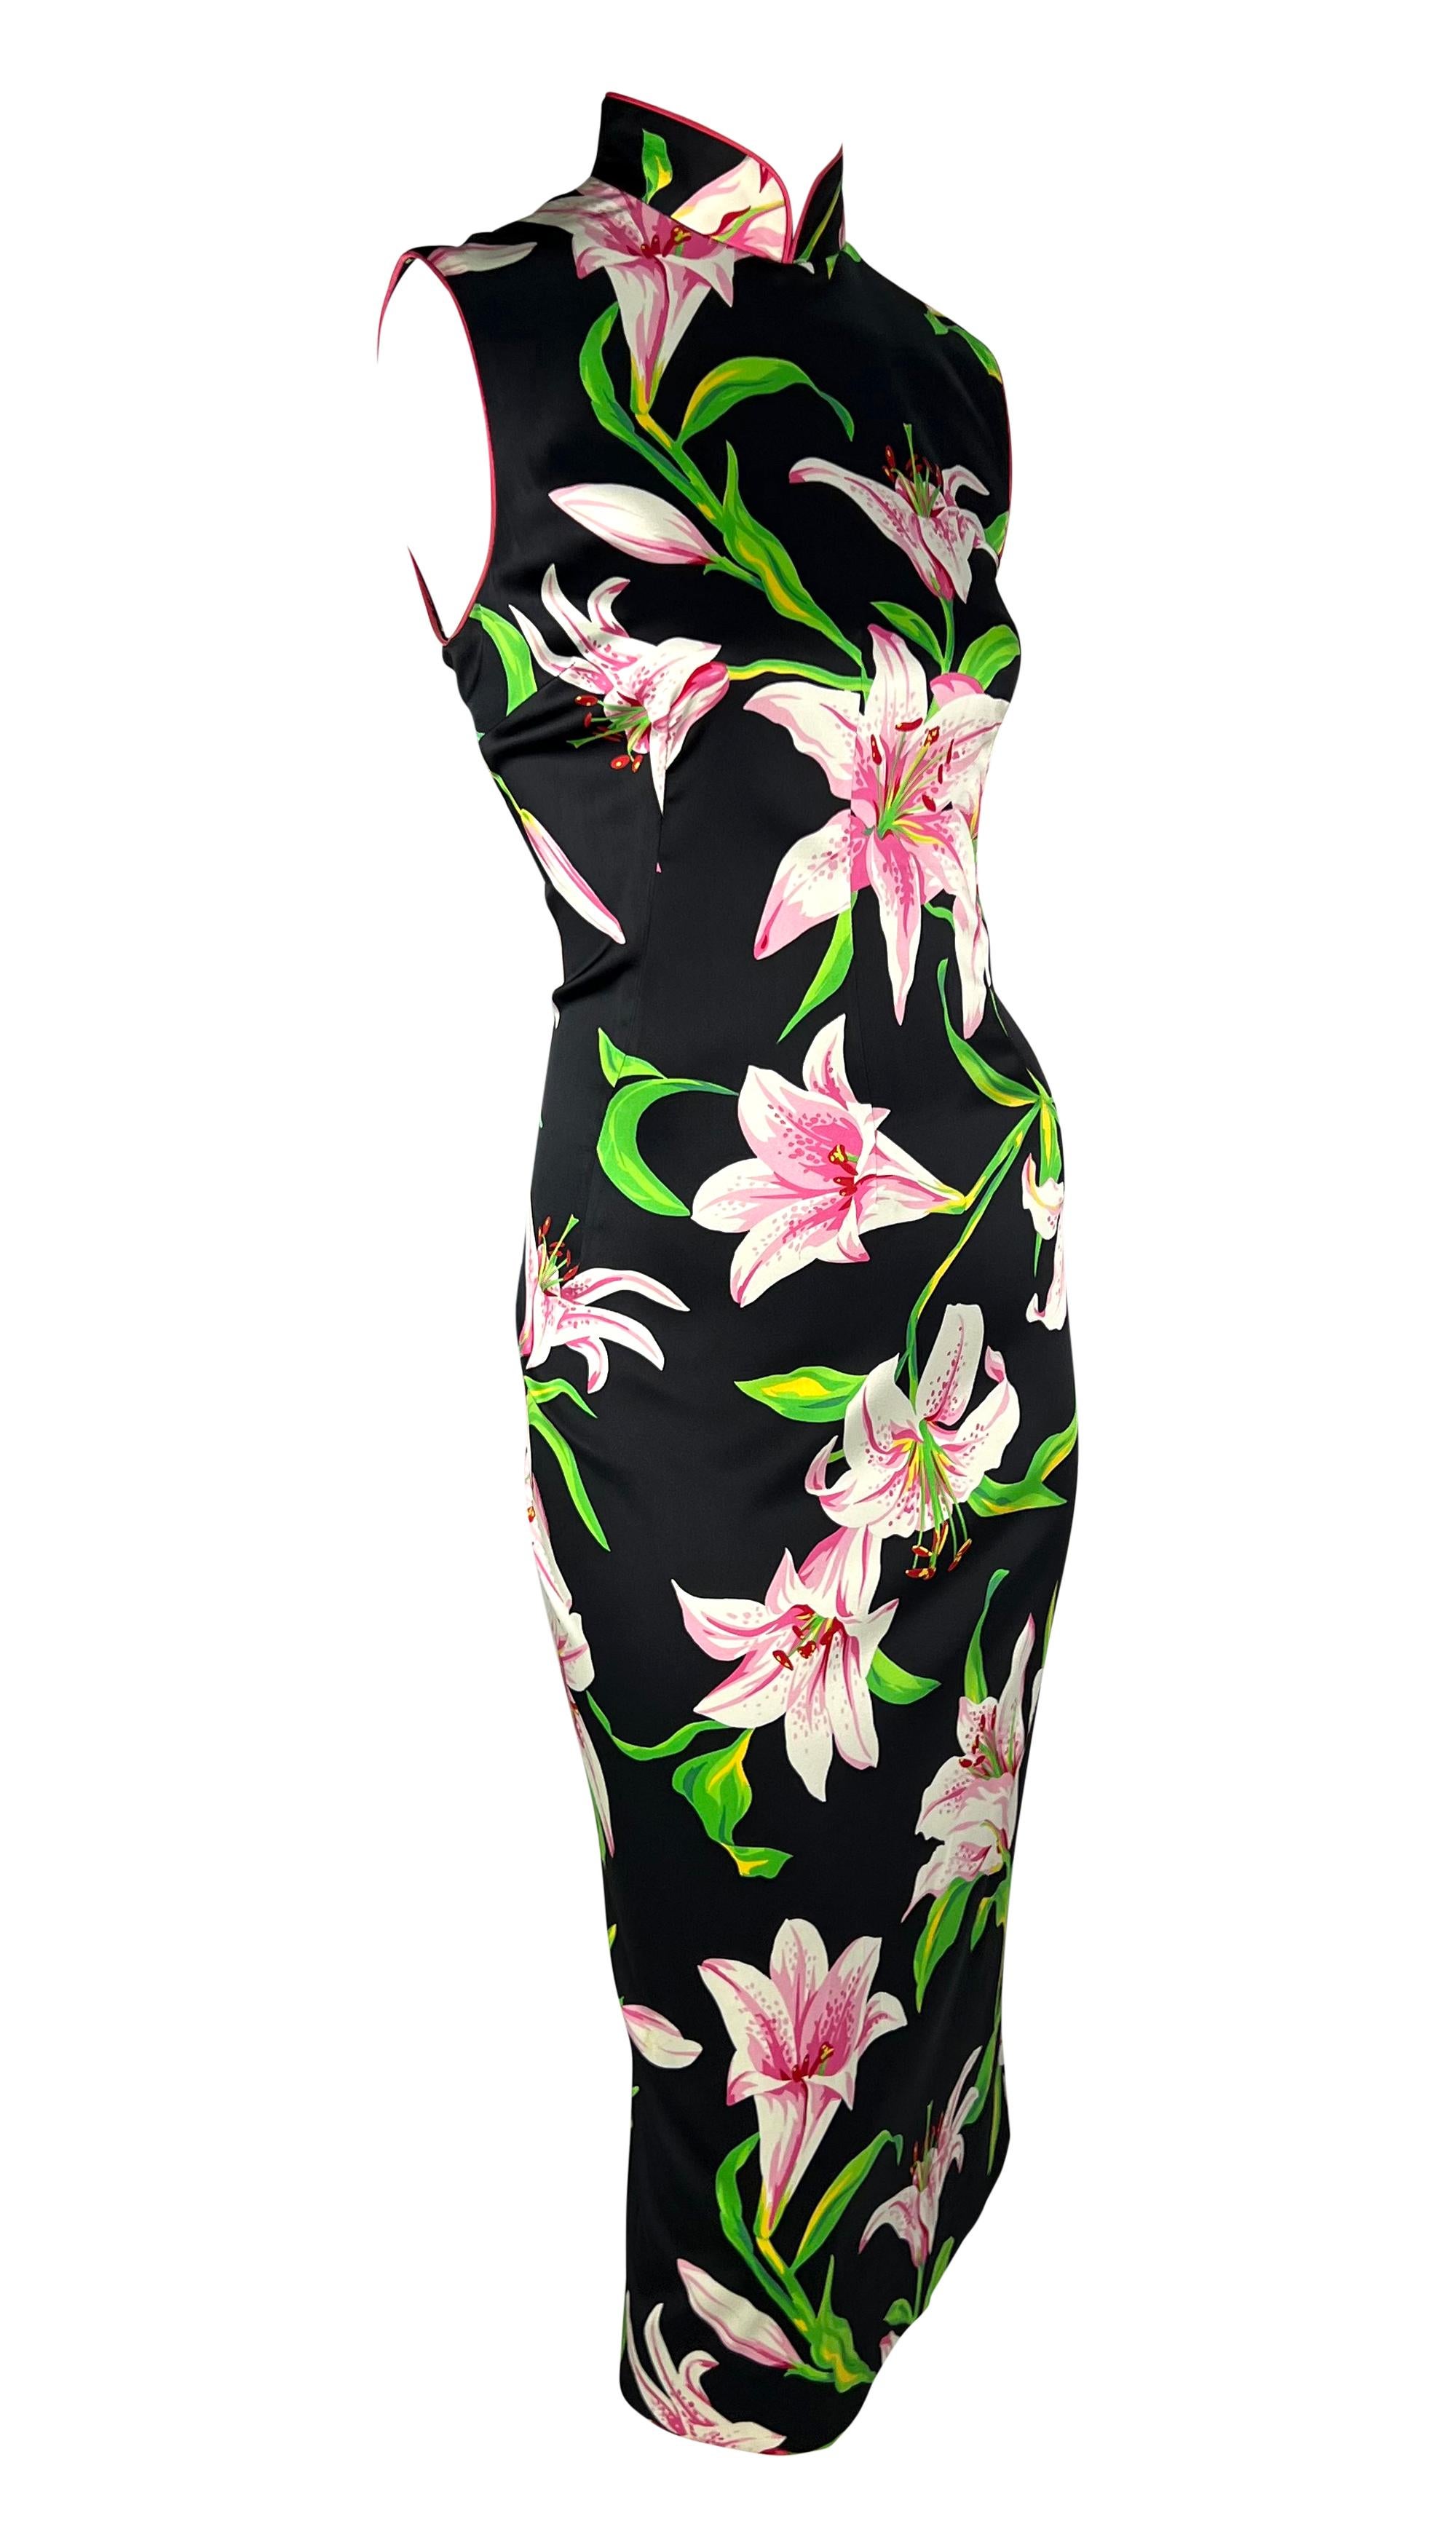 S/S 2001 Dolce & Gabbana Black Pink Lilly Print Bodycon Satin Sleeveless Dress For Sale 3